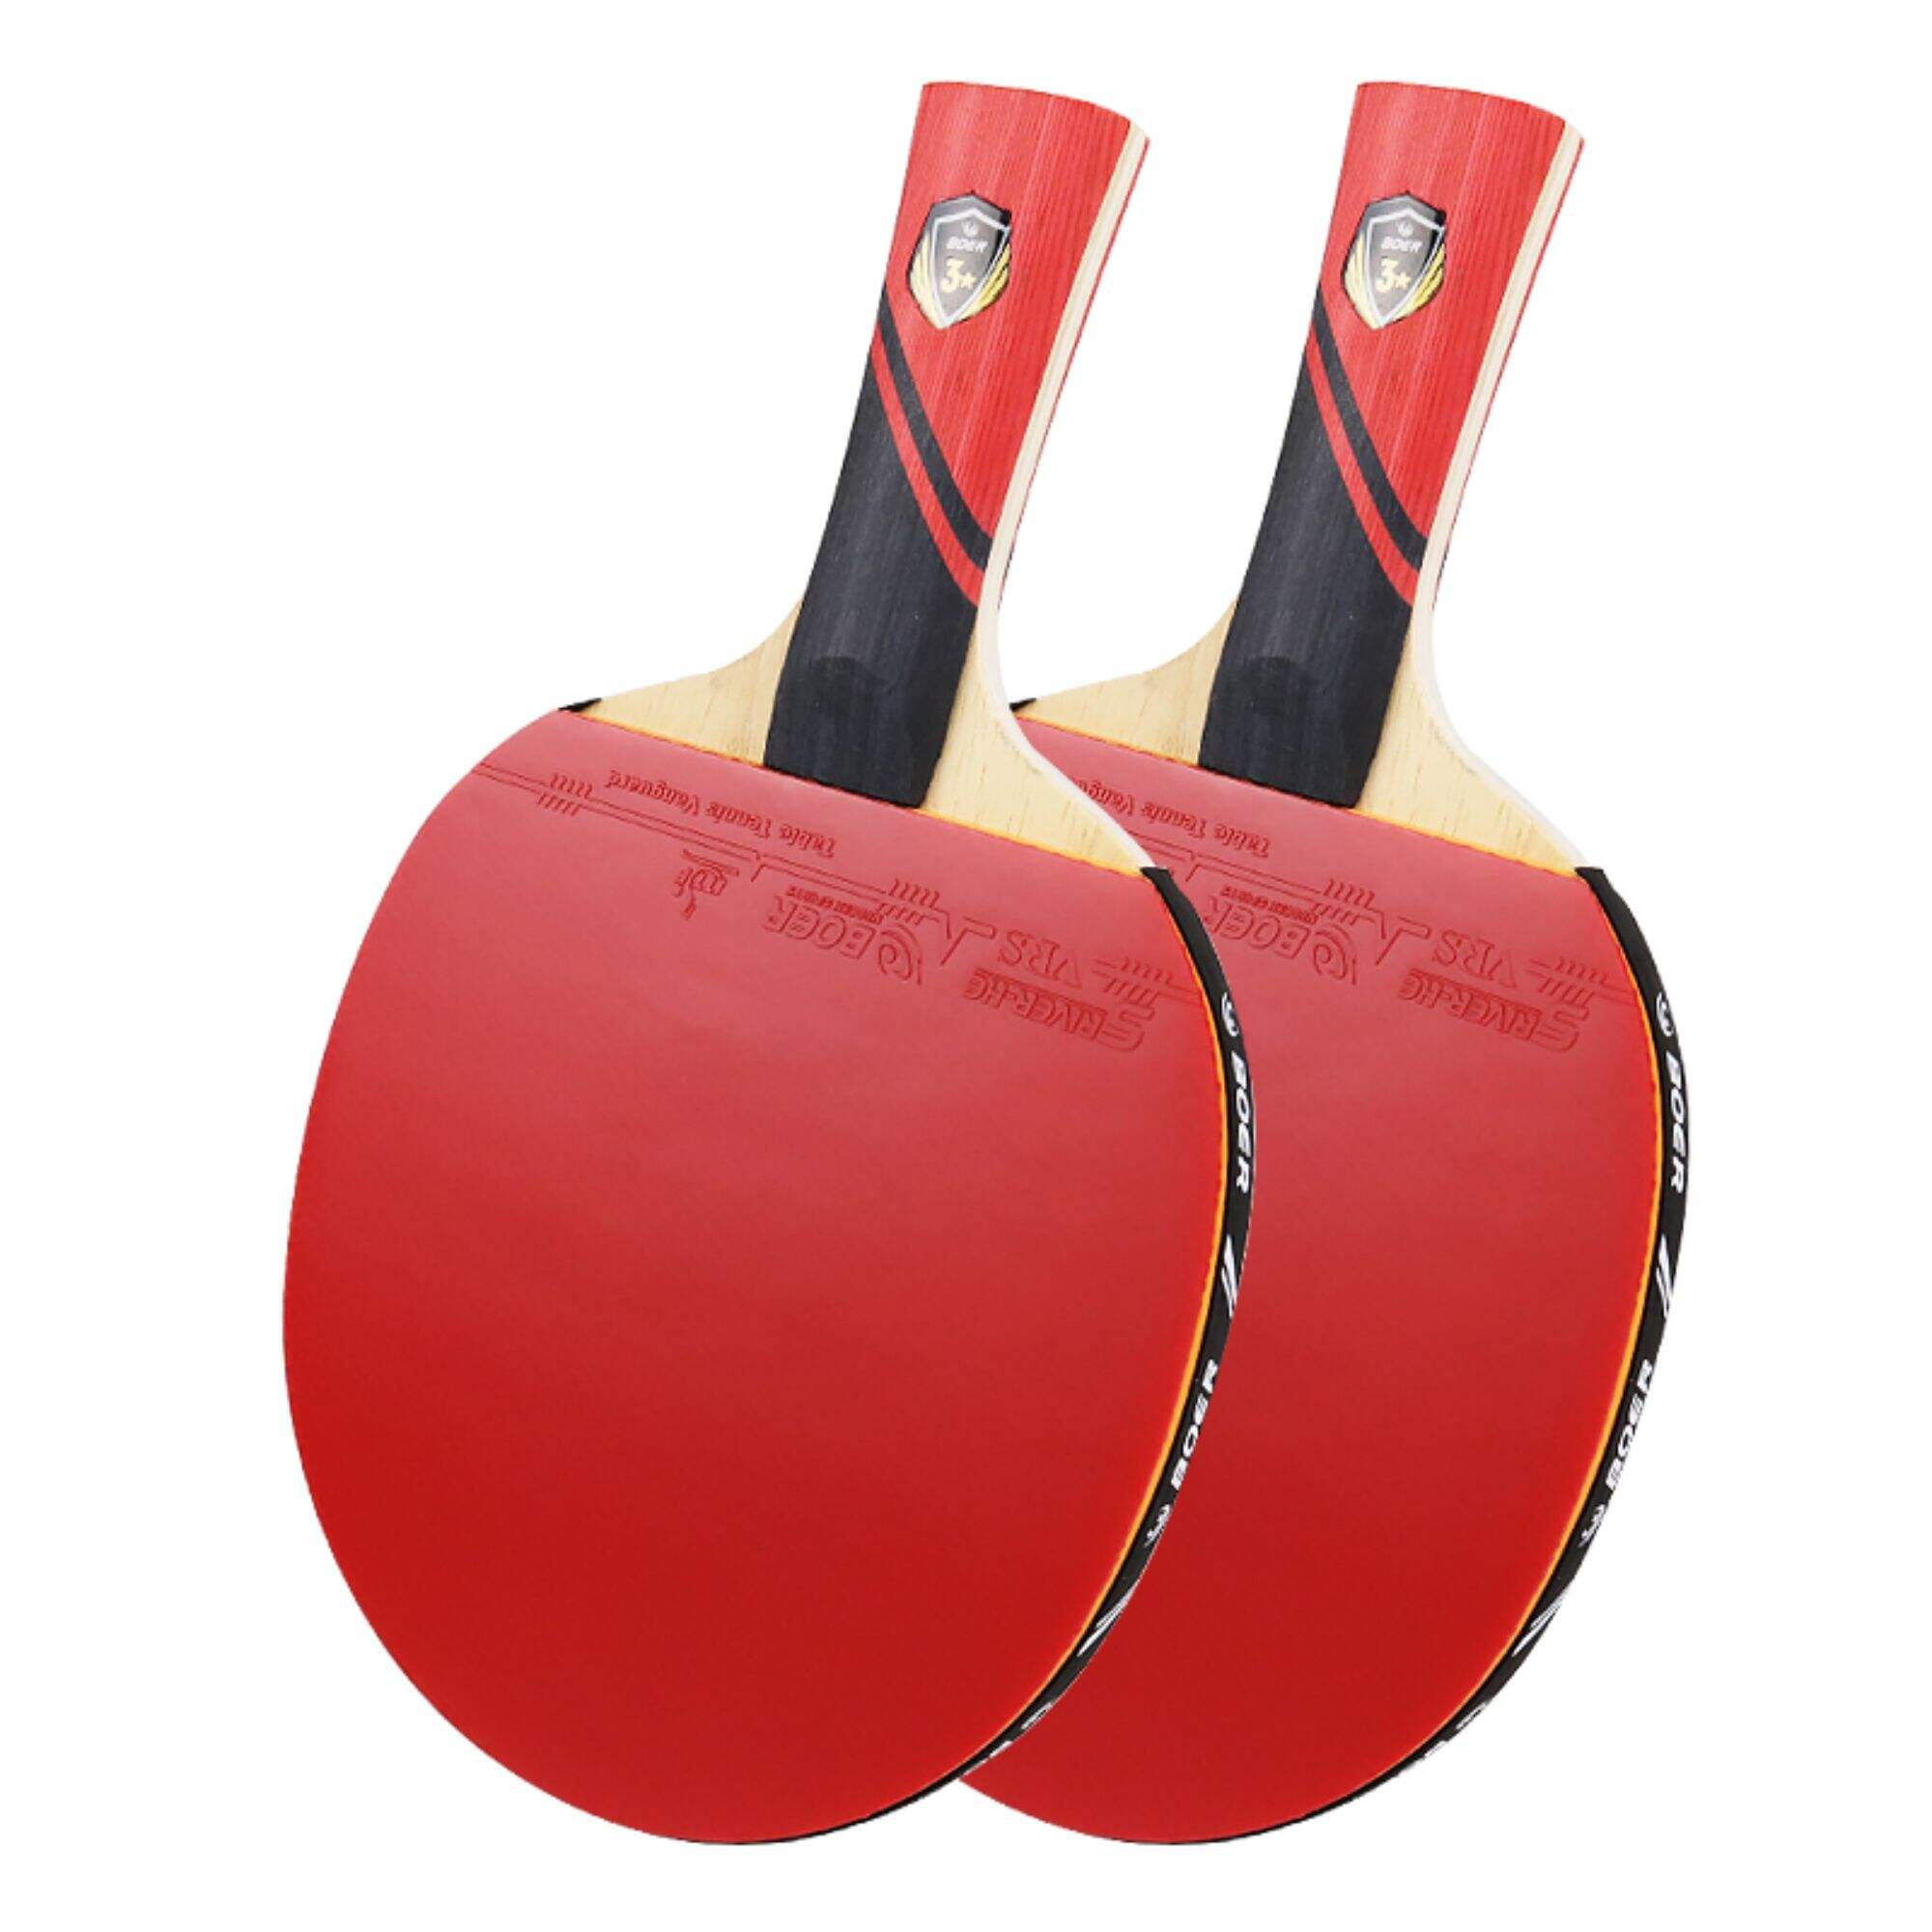 Boer 3star Professional Table Tennis Rakcet/Bat/Paddle